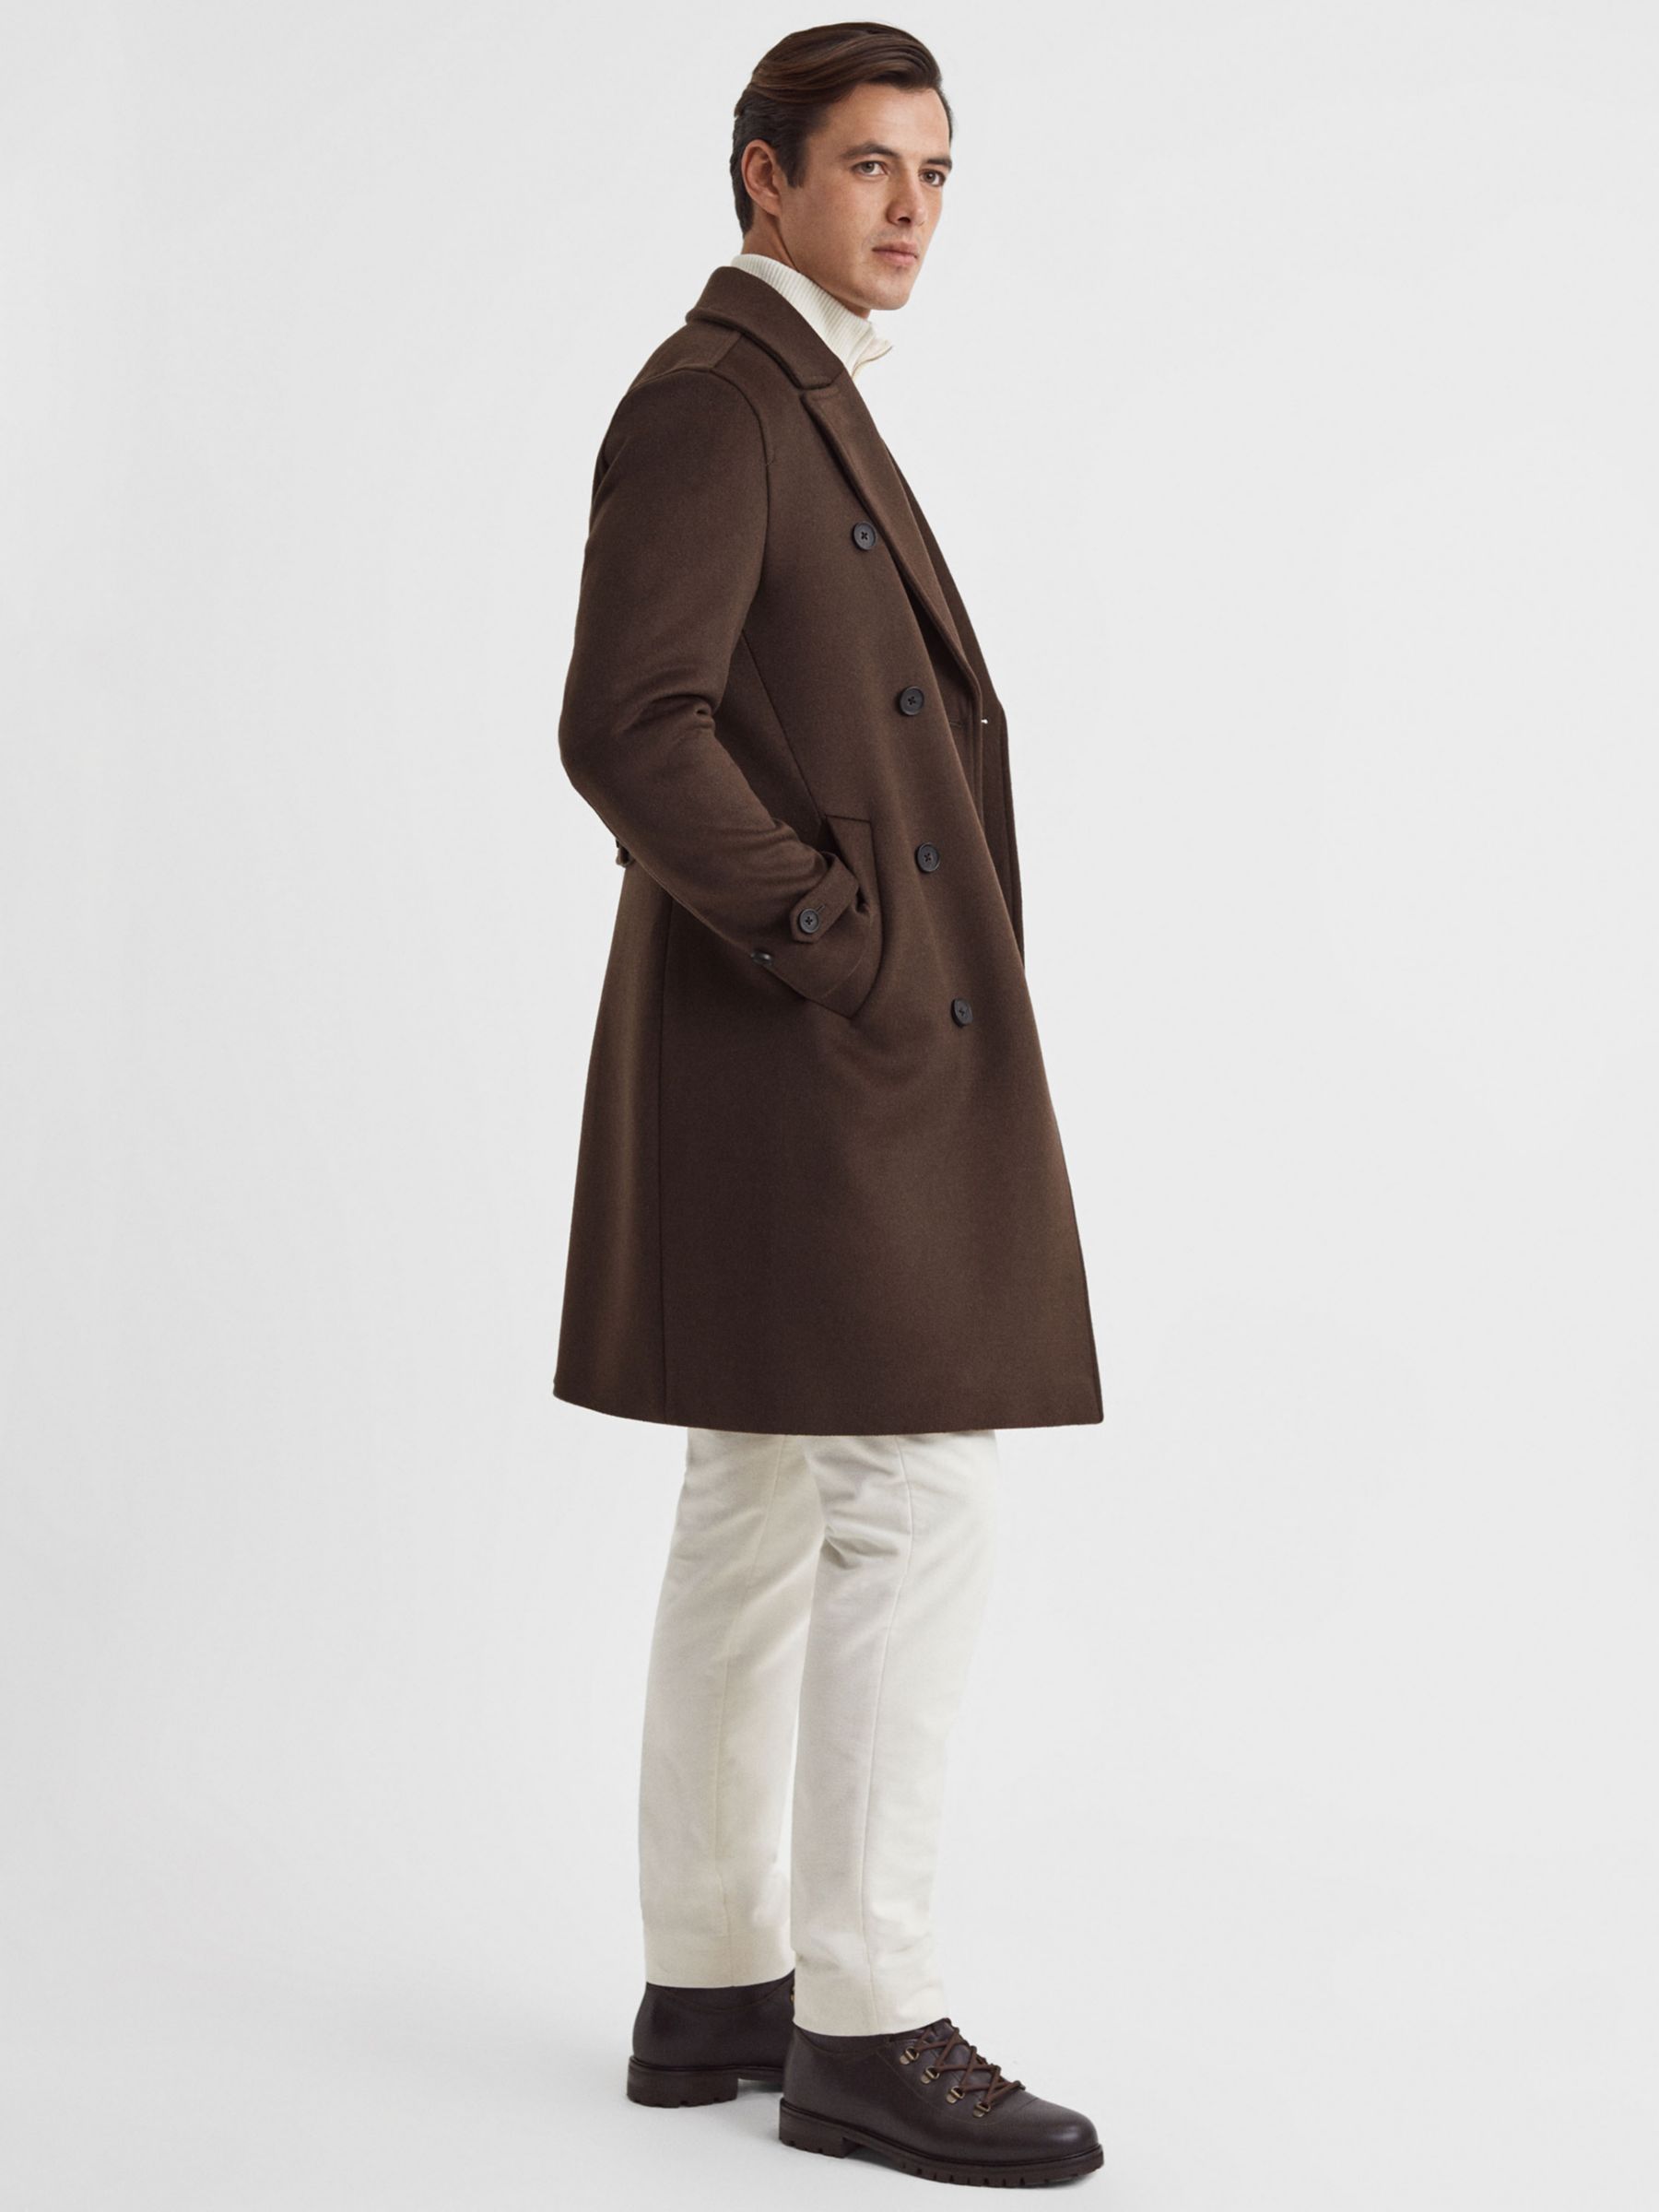 Ted Baker Claim Wool Blend Overcoat, Mahogany, S